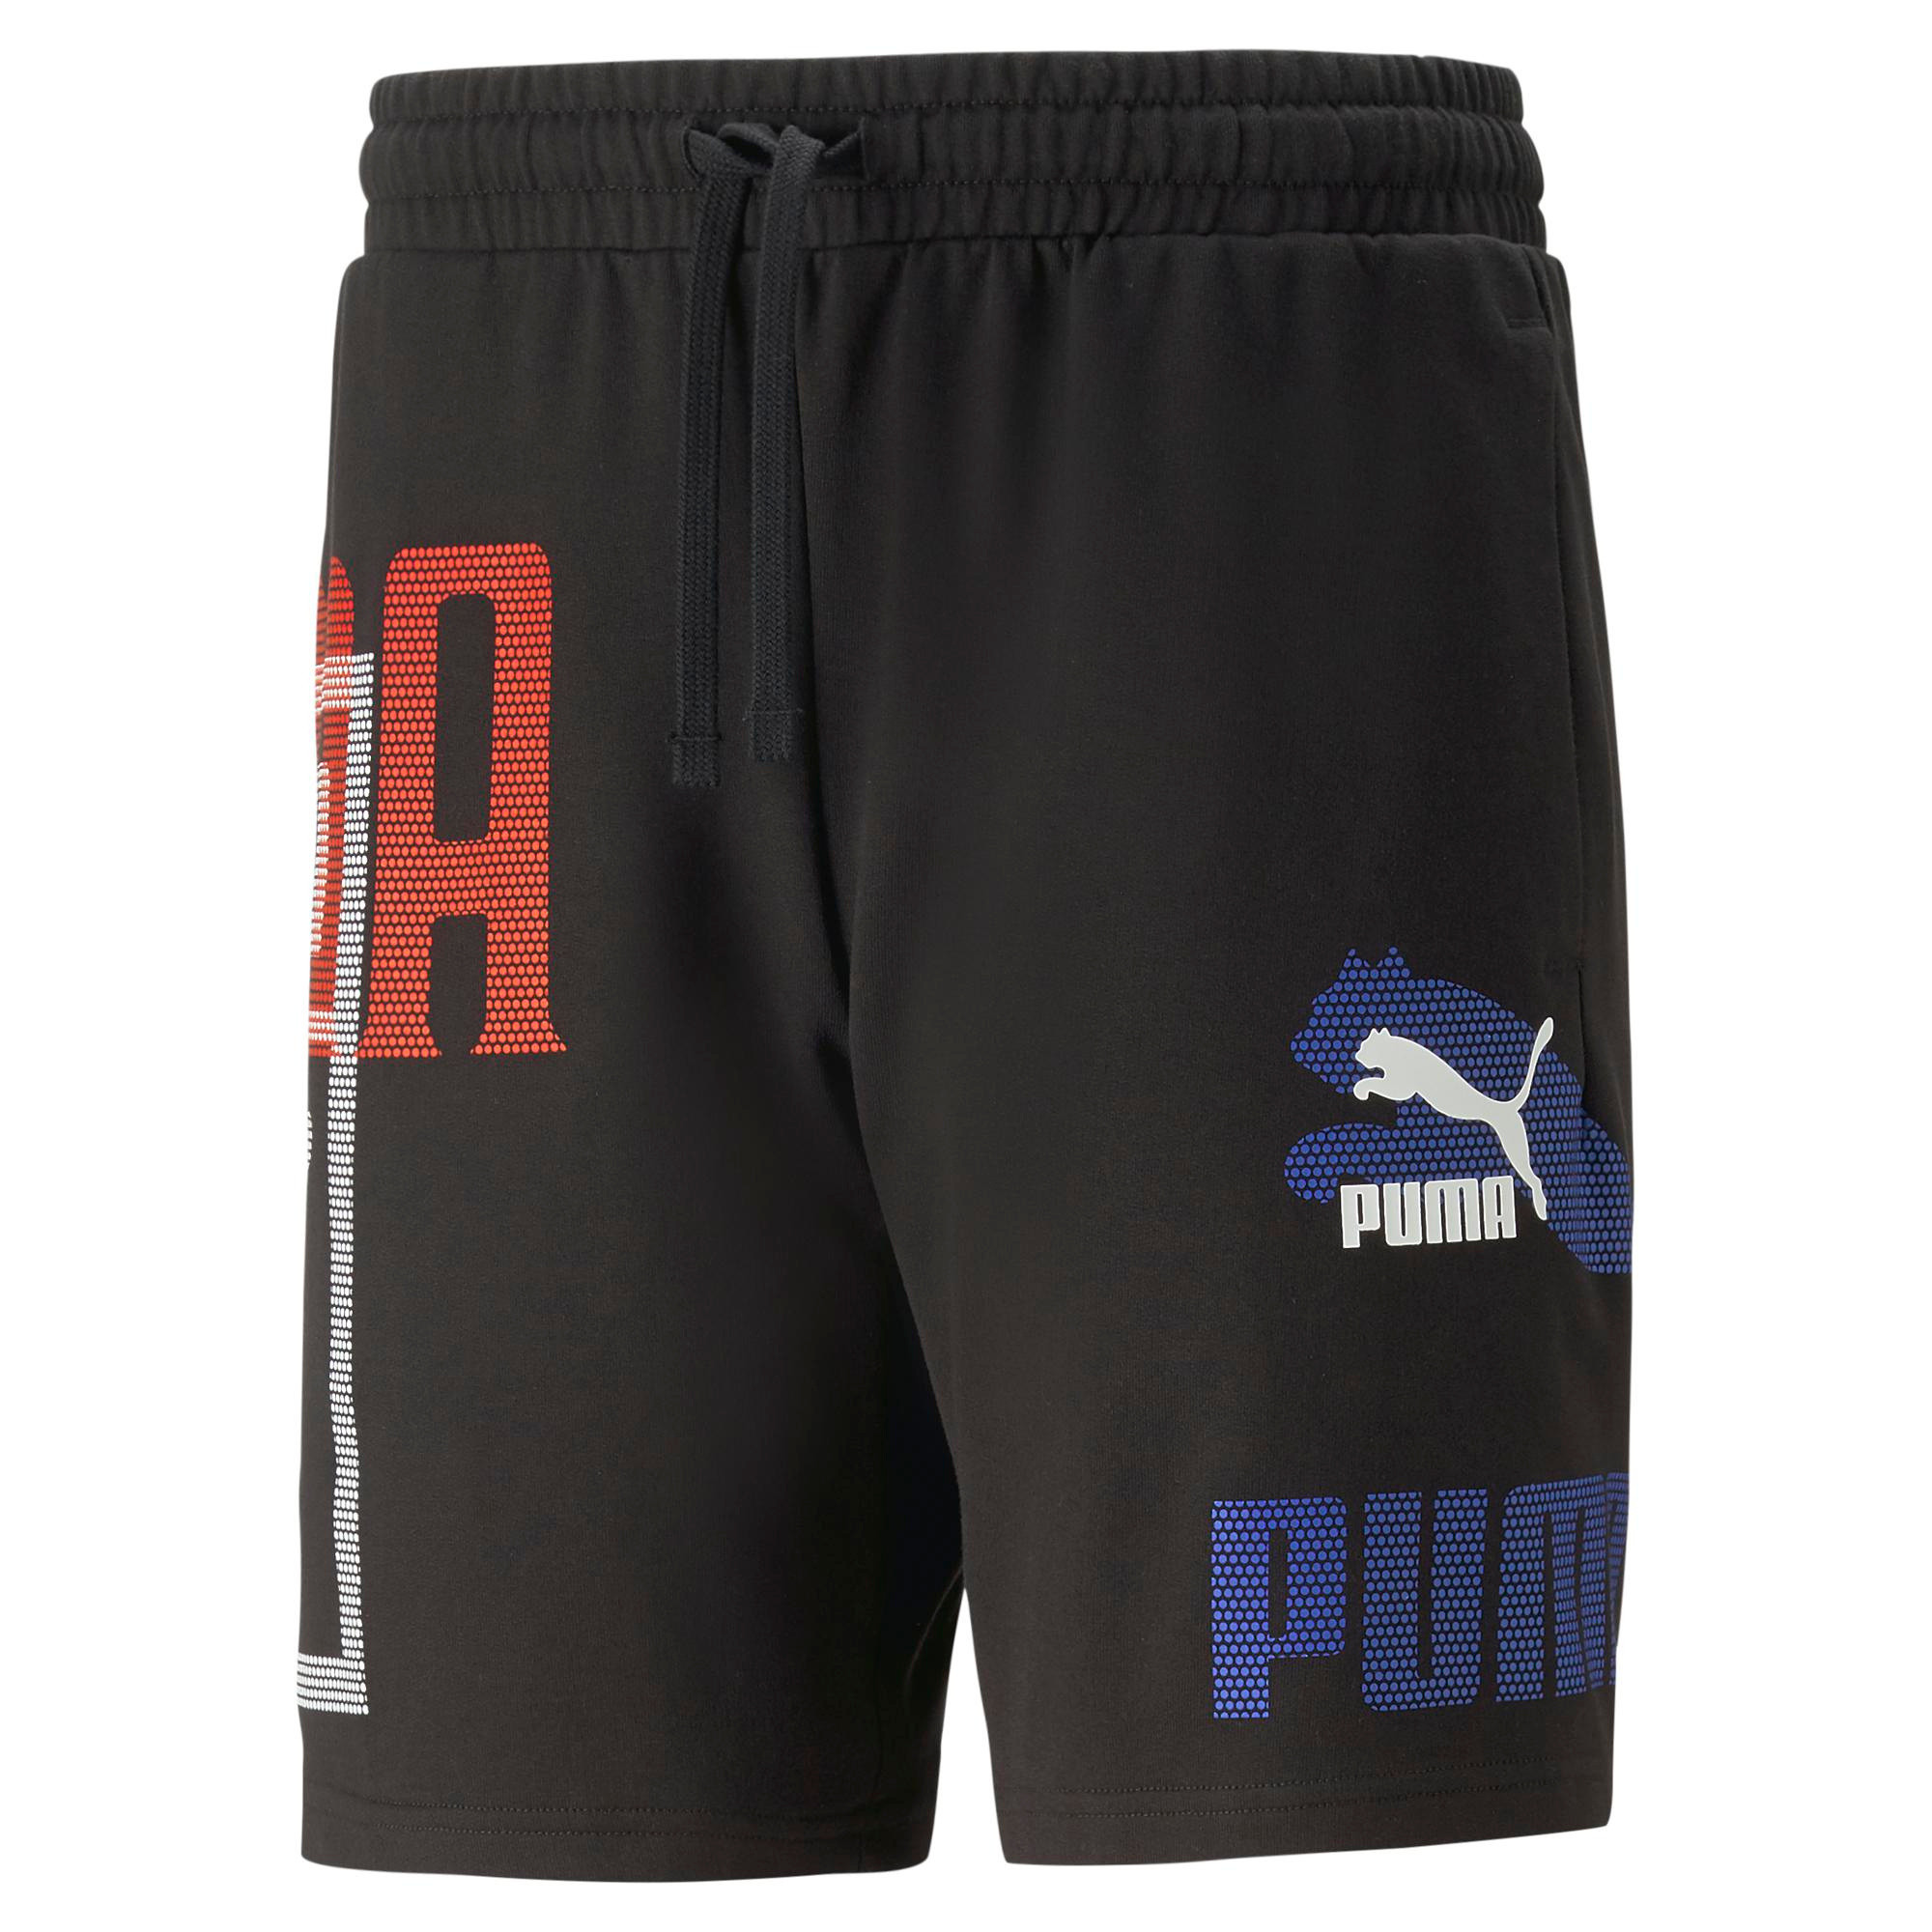 Puma - Pantaloncini con logo, Nero, large image number 0